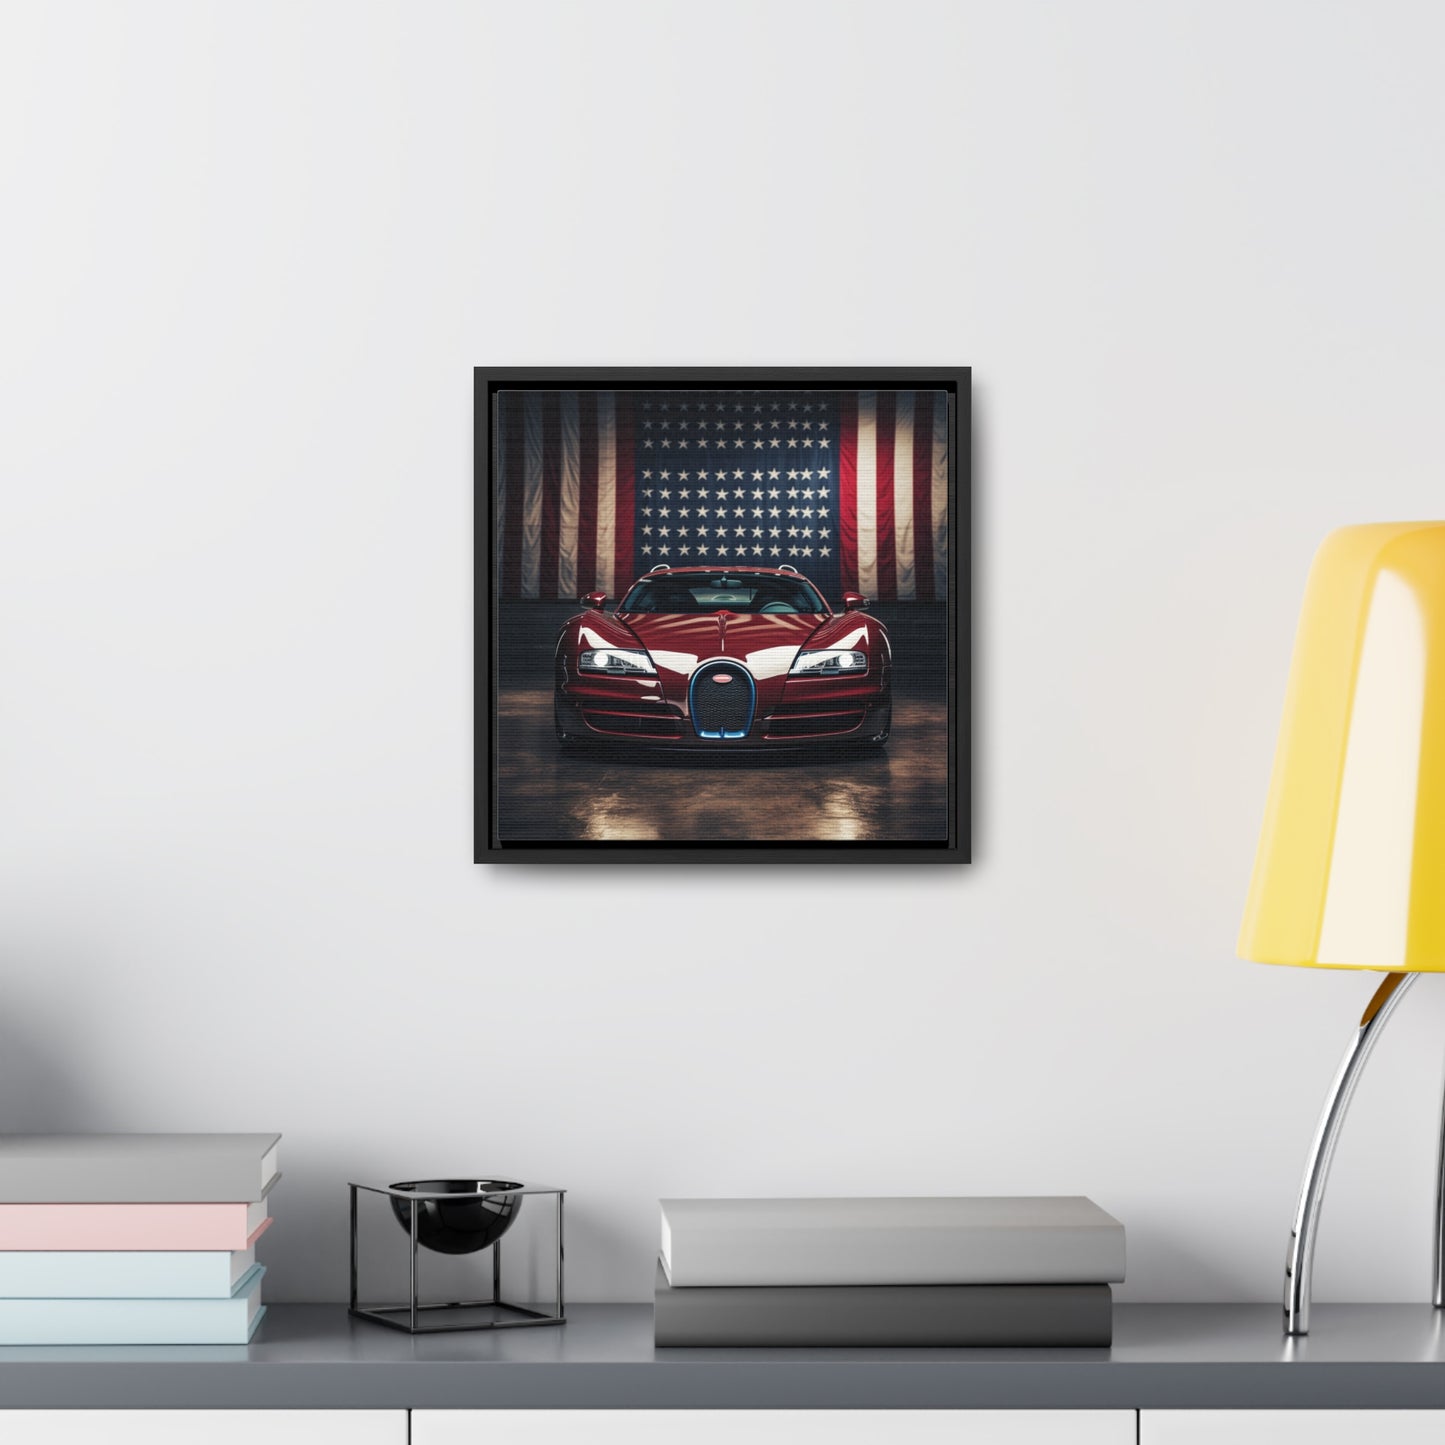 Gallery Canvas Wraps, Square Frame American Flag Background Bugatti 1